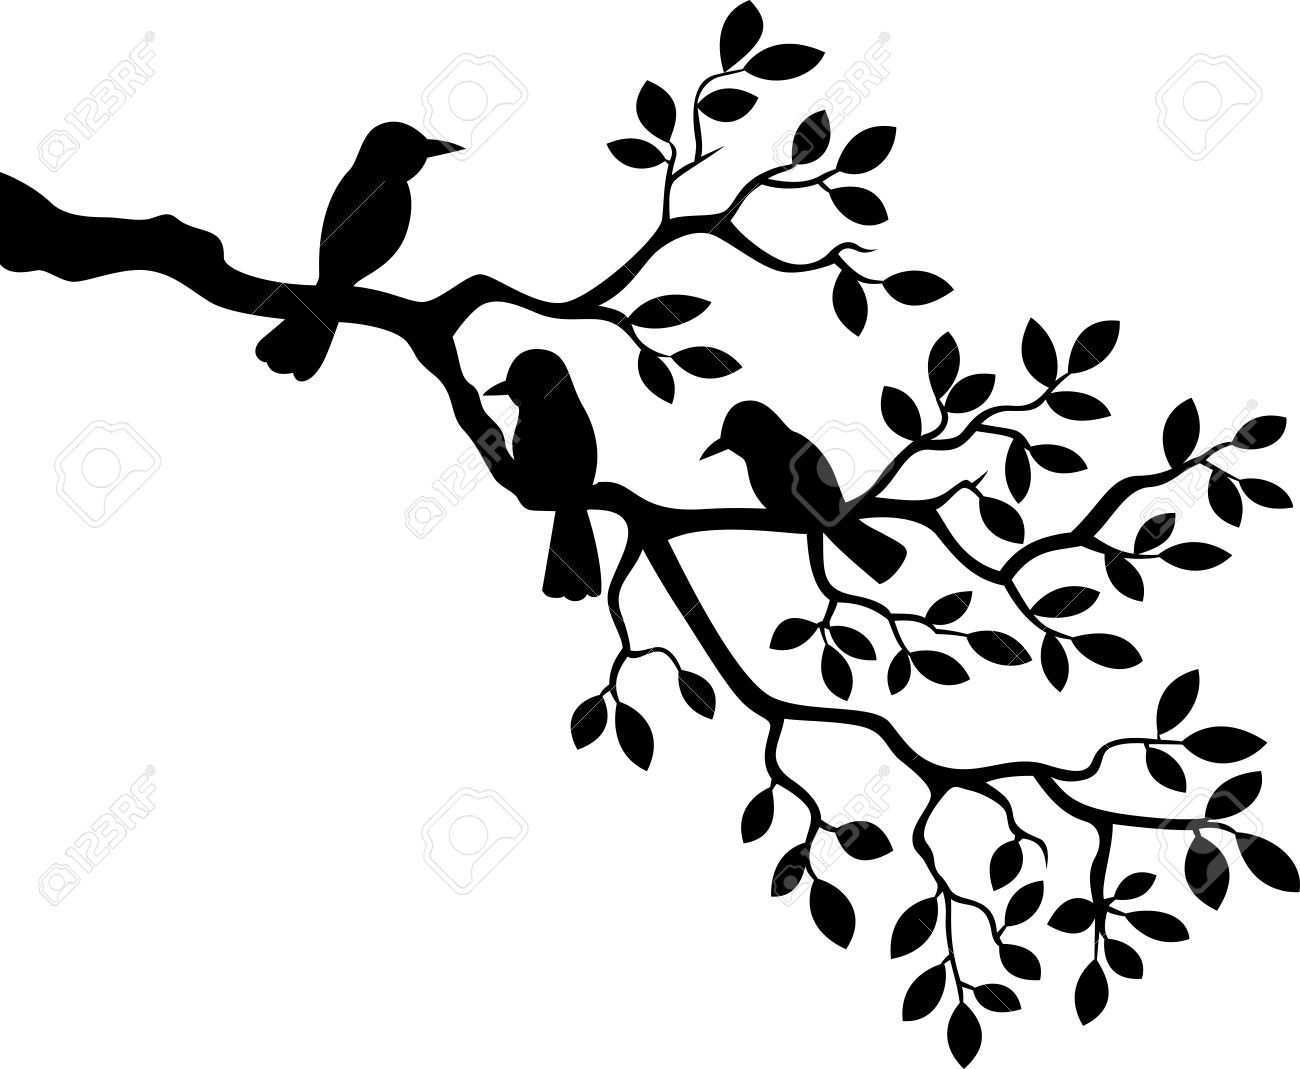 Resultat De Recherche D Images Pour Silhouette D Arbre A Imprimer Vogel Stempel Baum Schablone Scherenschnitt Geburtstag